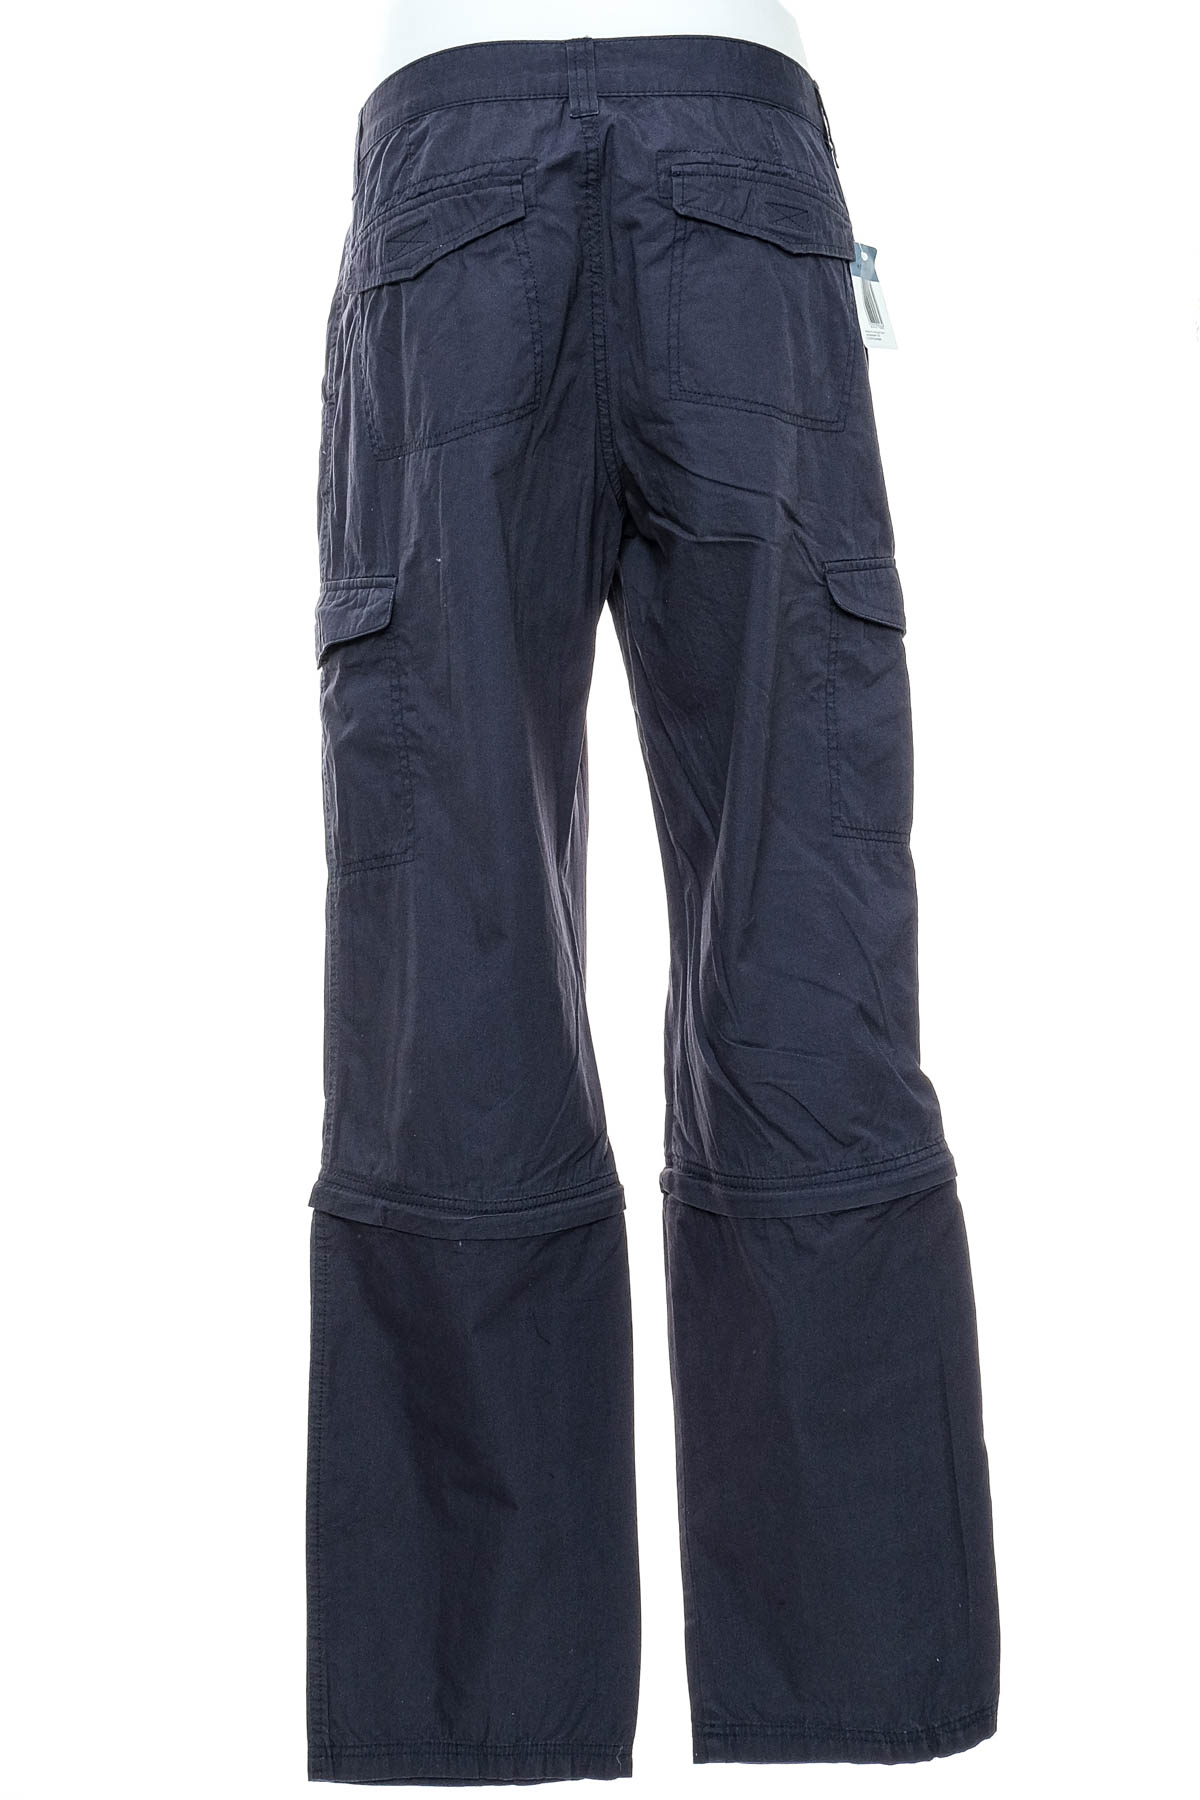 Pantalon pentru bărbați - Watsons - 1